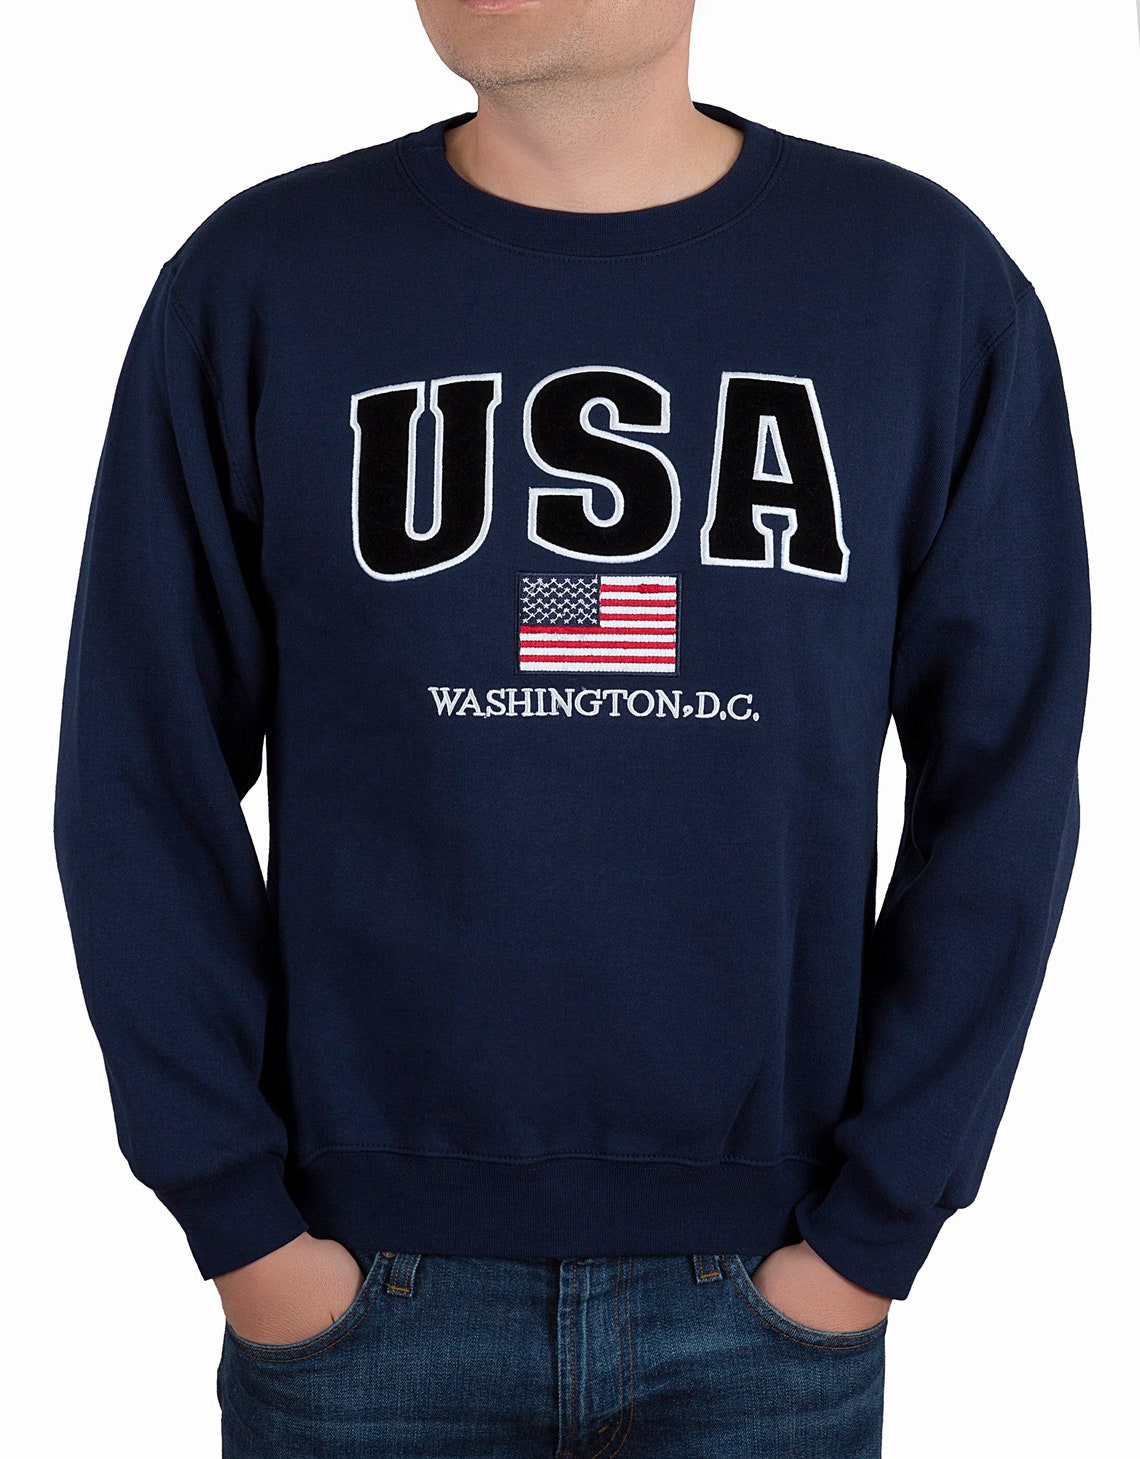 USA Washington DC Embroidered Crewneck Sweatshirt Navy - Etsy